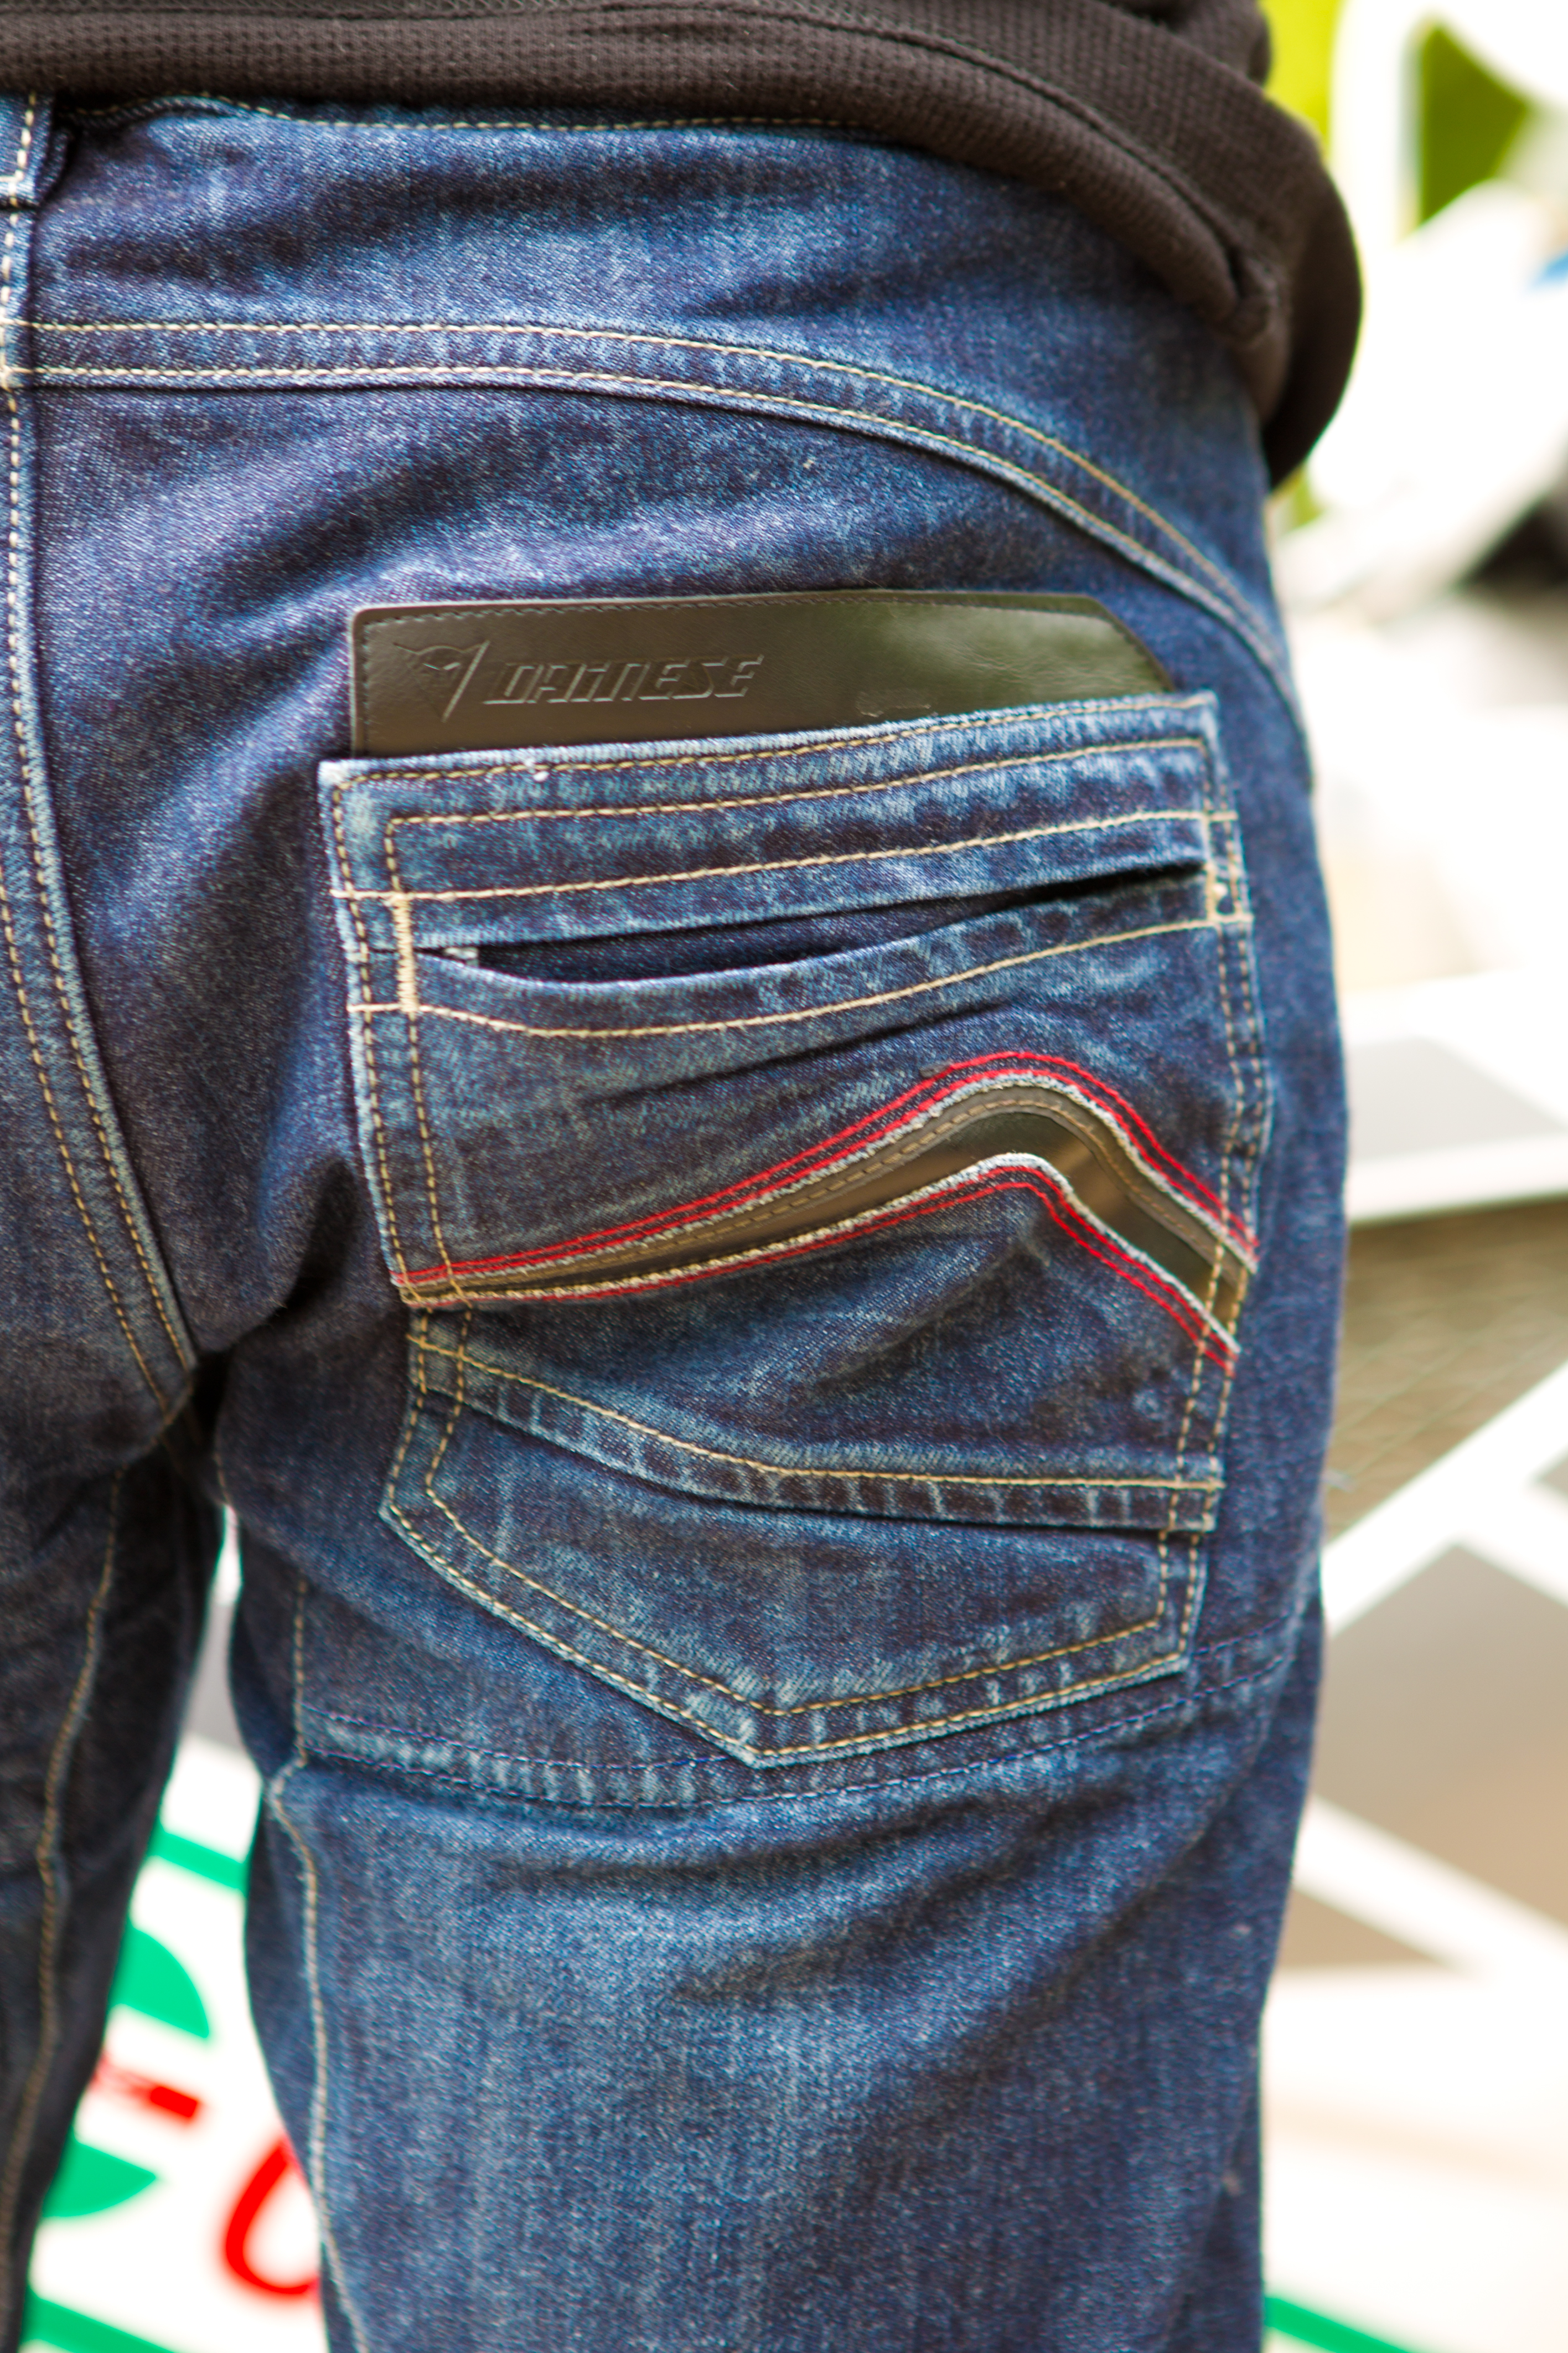 Dainese Bonneville regular jeans rear pocket